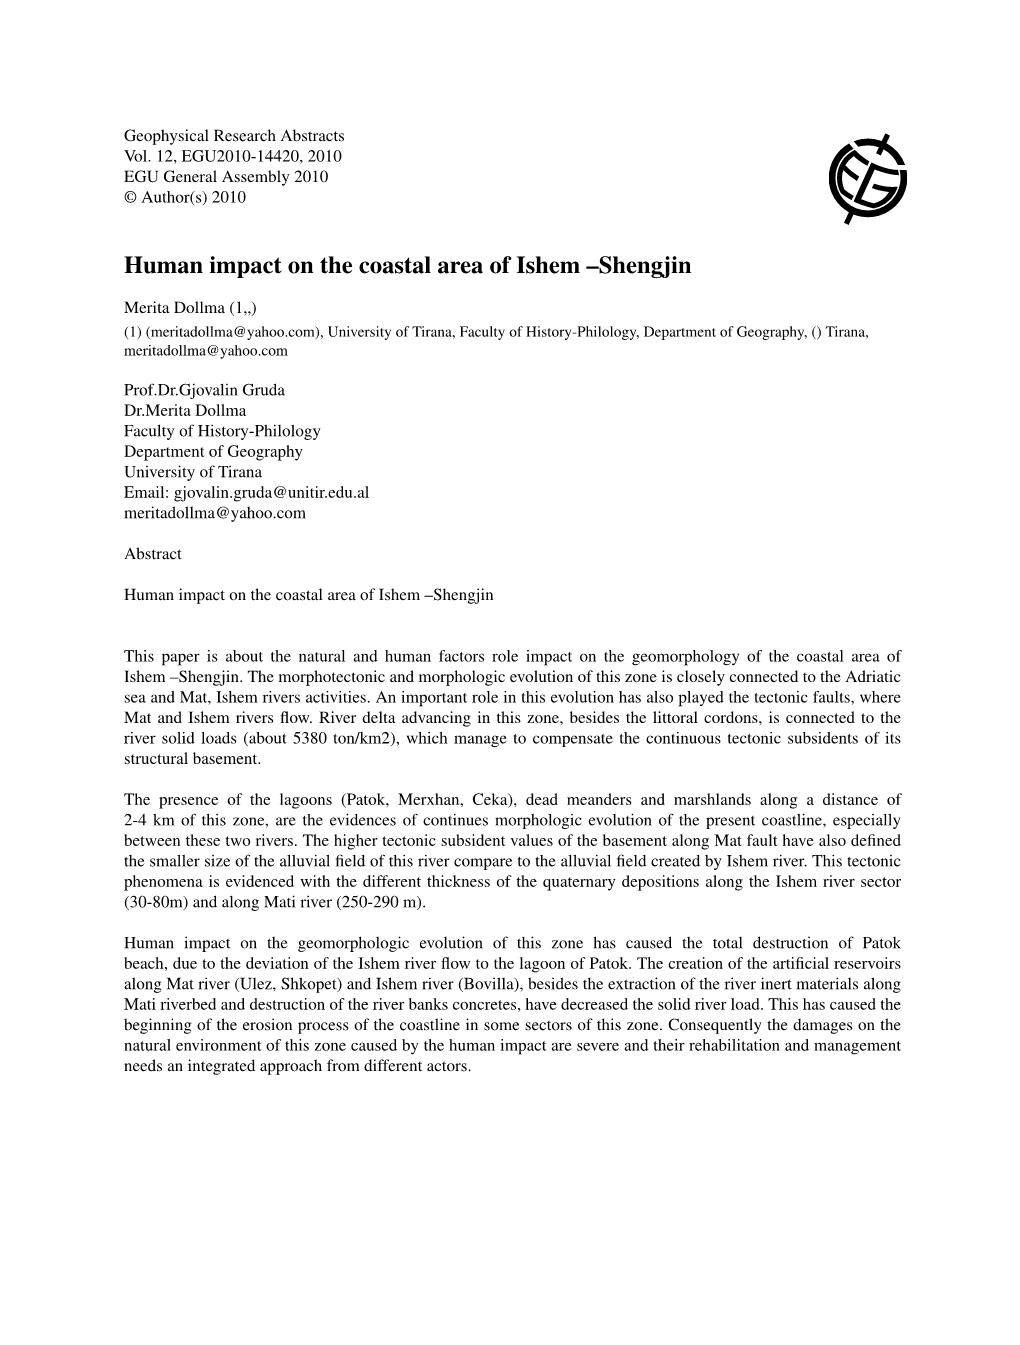 Human Impact on the Coastal Area of Ishem –Shengjin